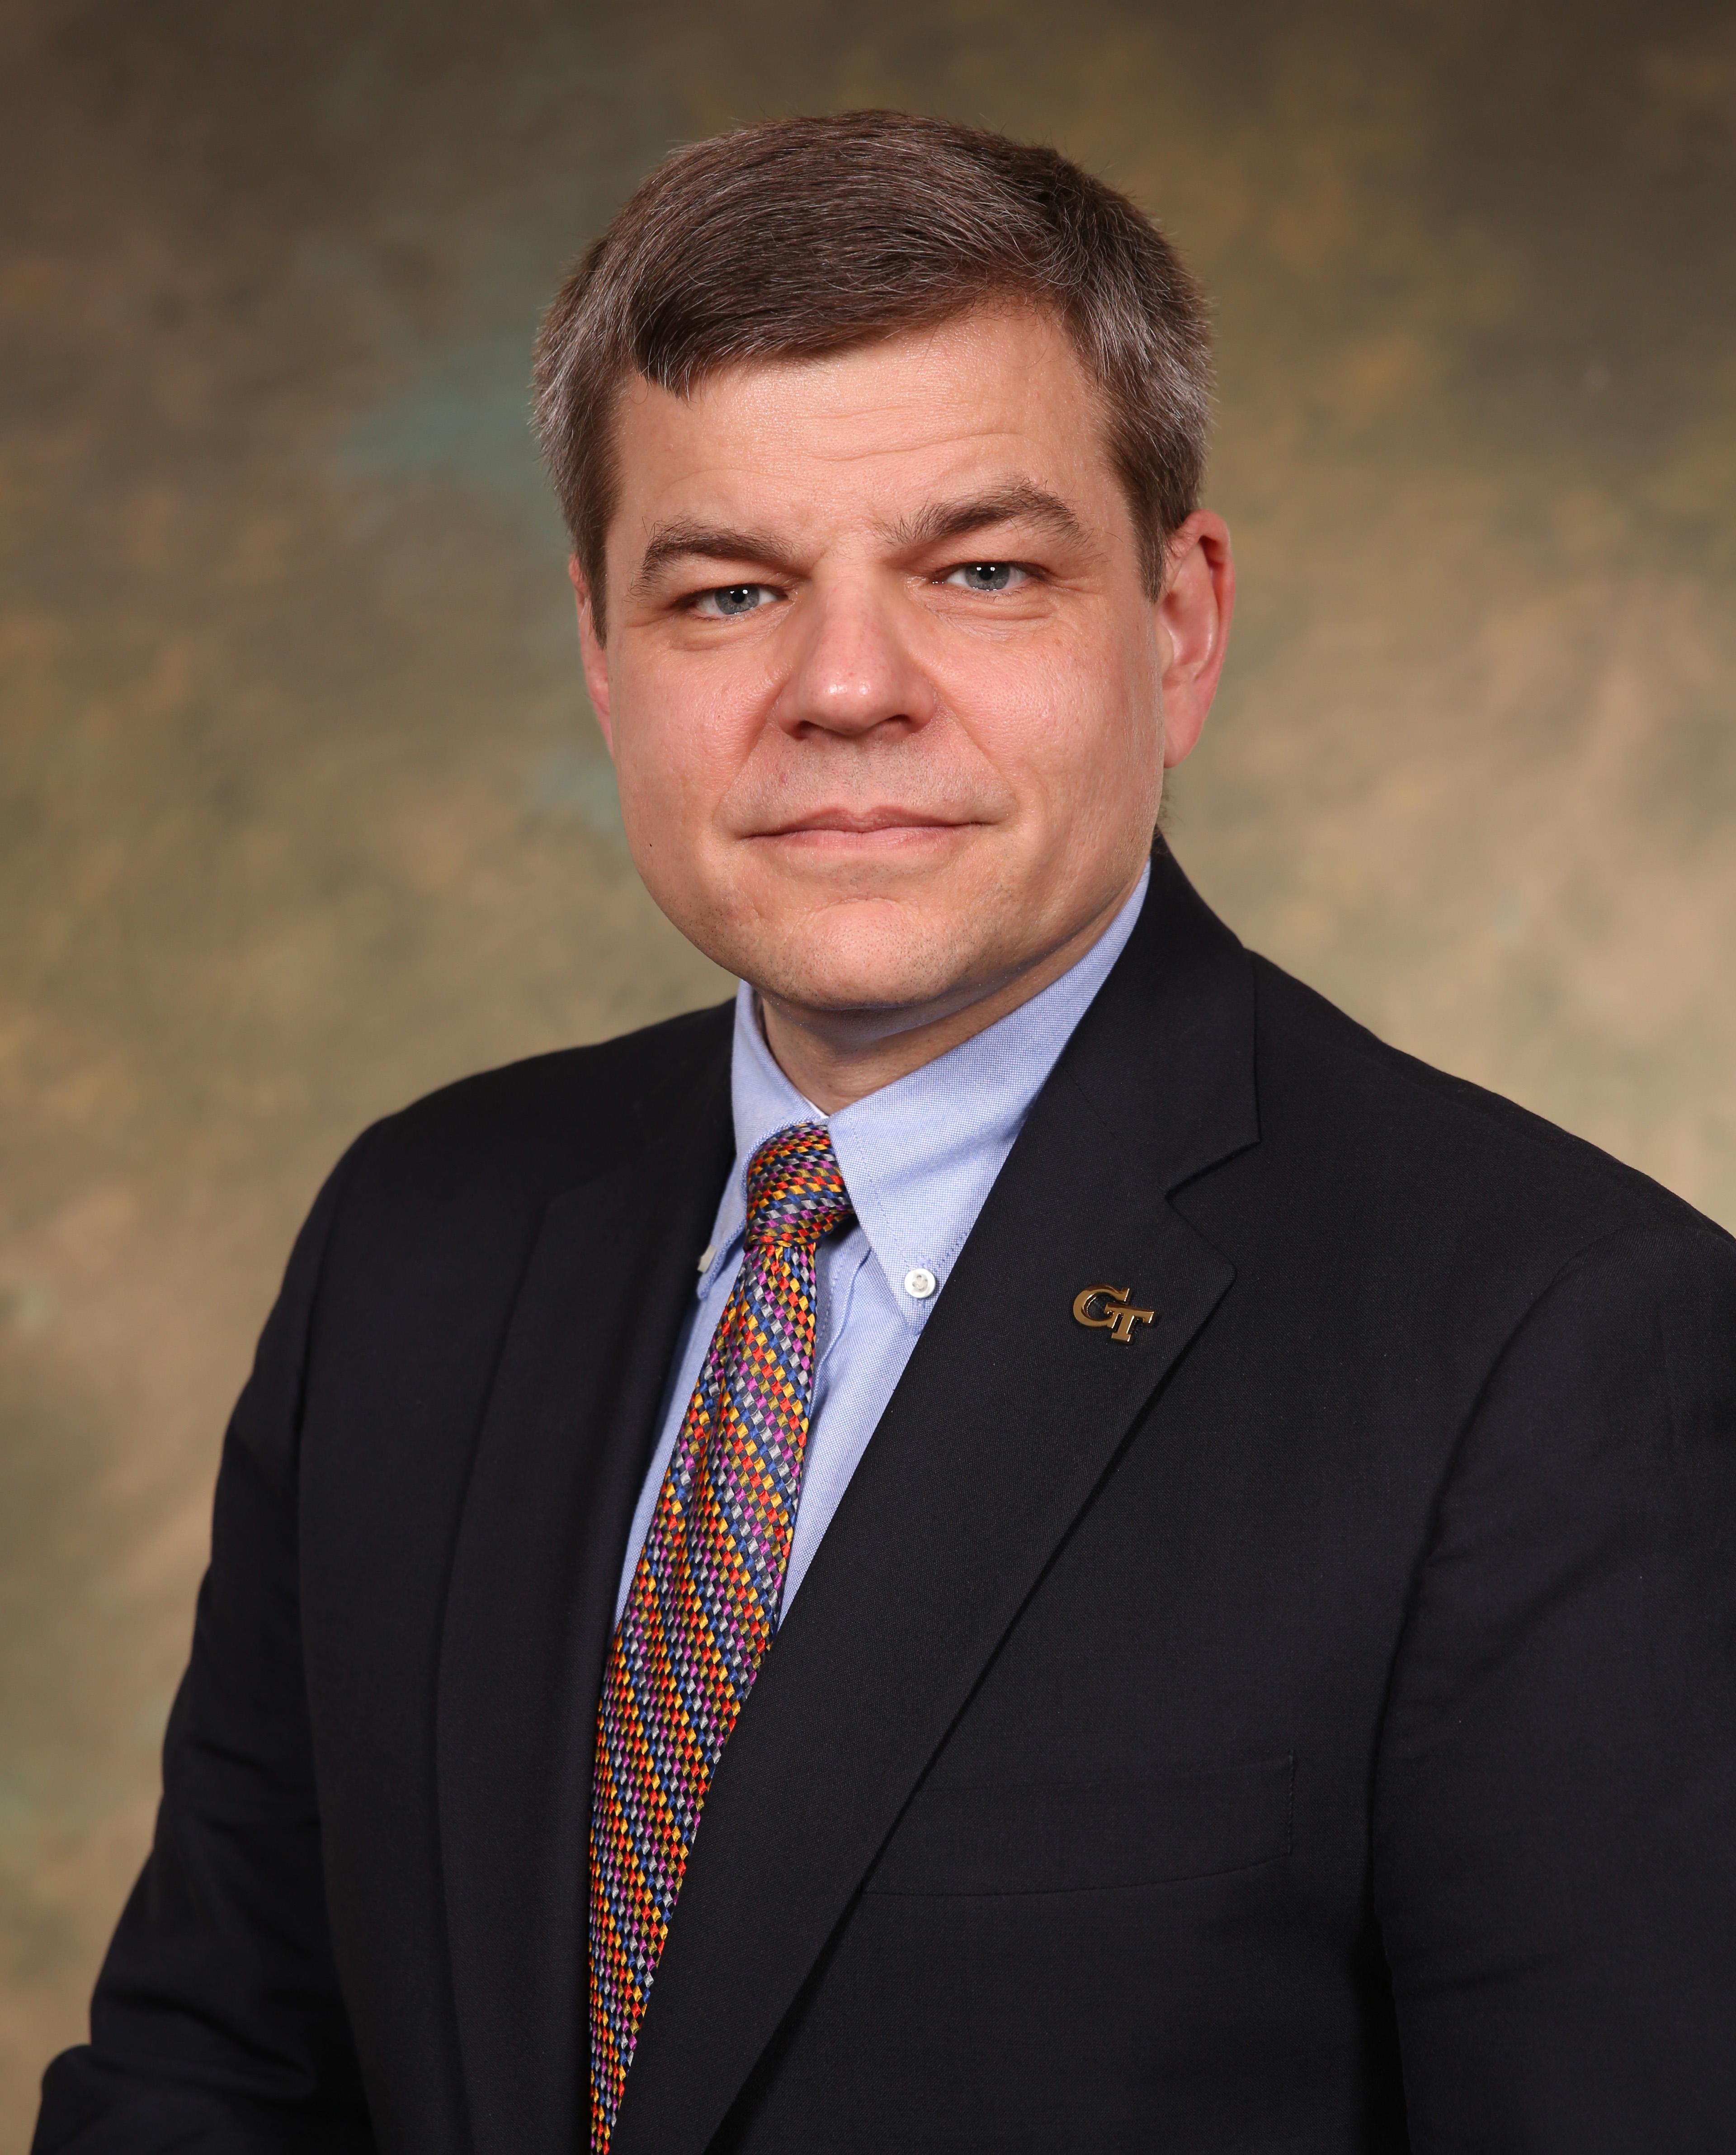 Thomas Kurfess, Ph.D., P.E., has begun his term as the 142nd president of the American Society of Mechanical Engineers (ASME).